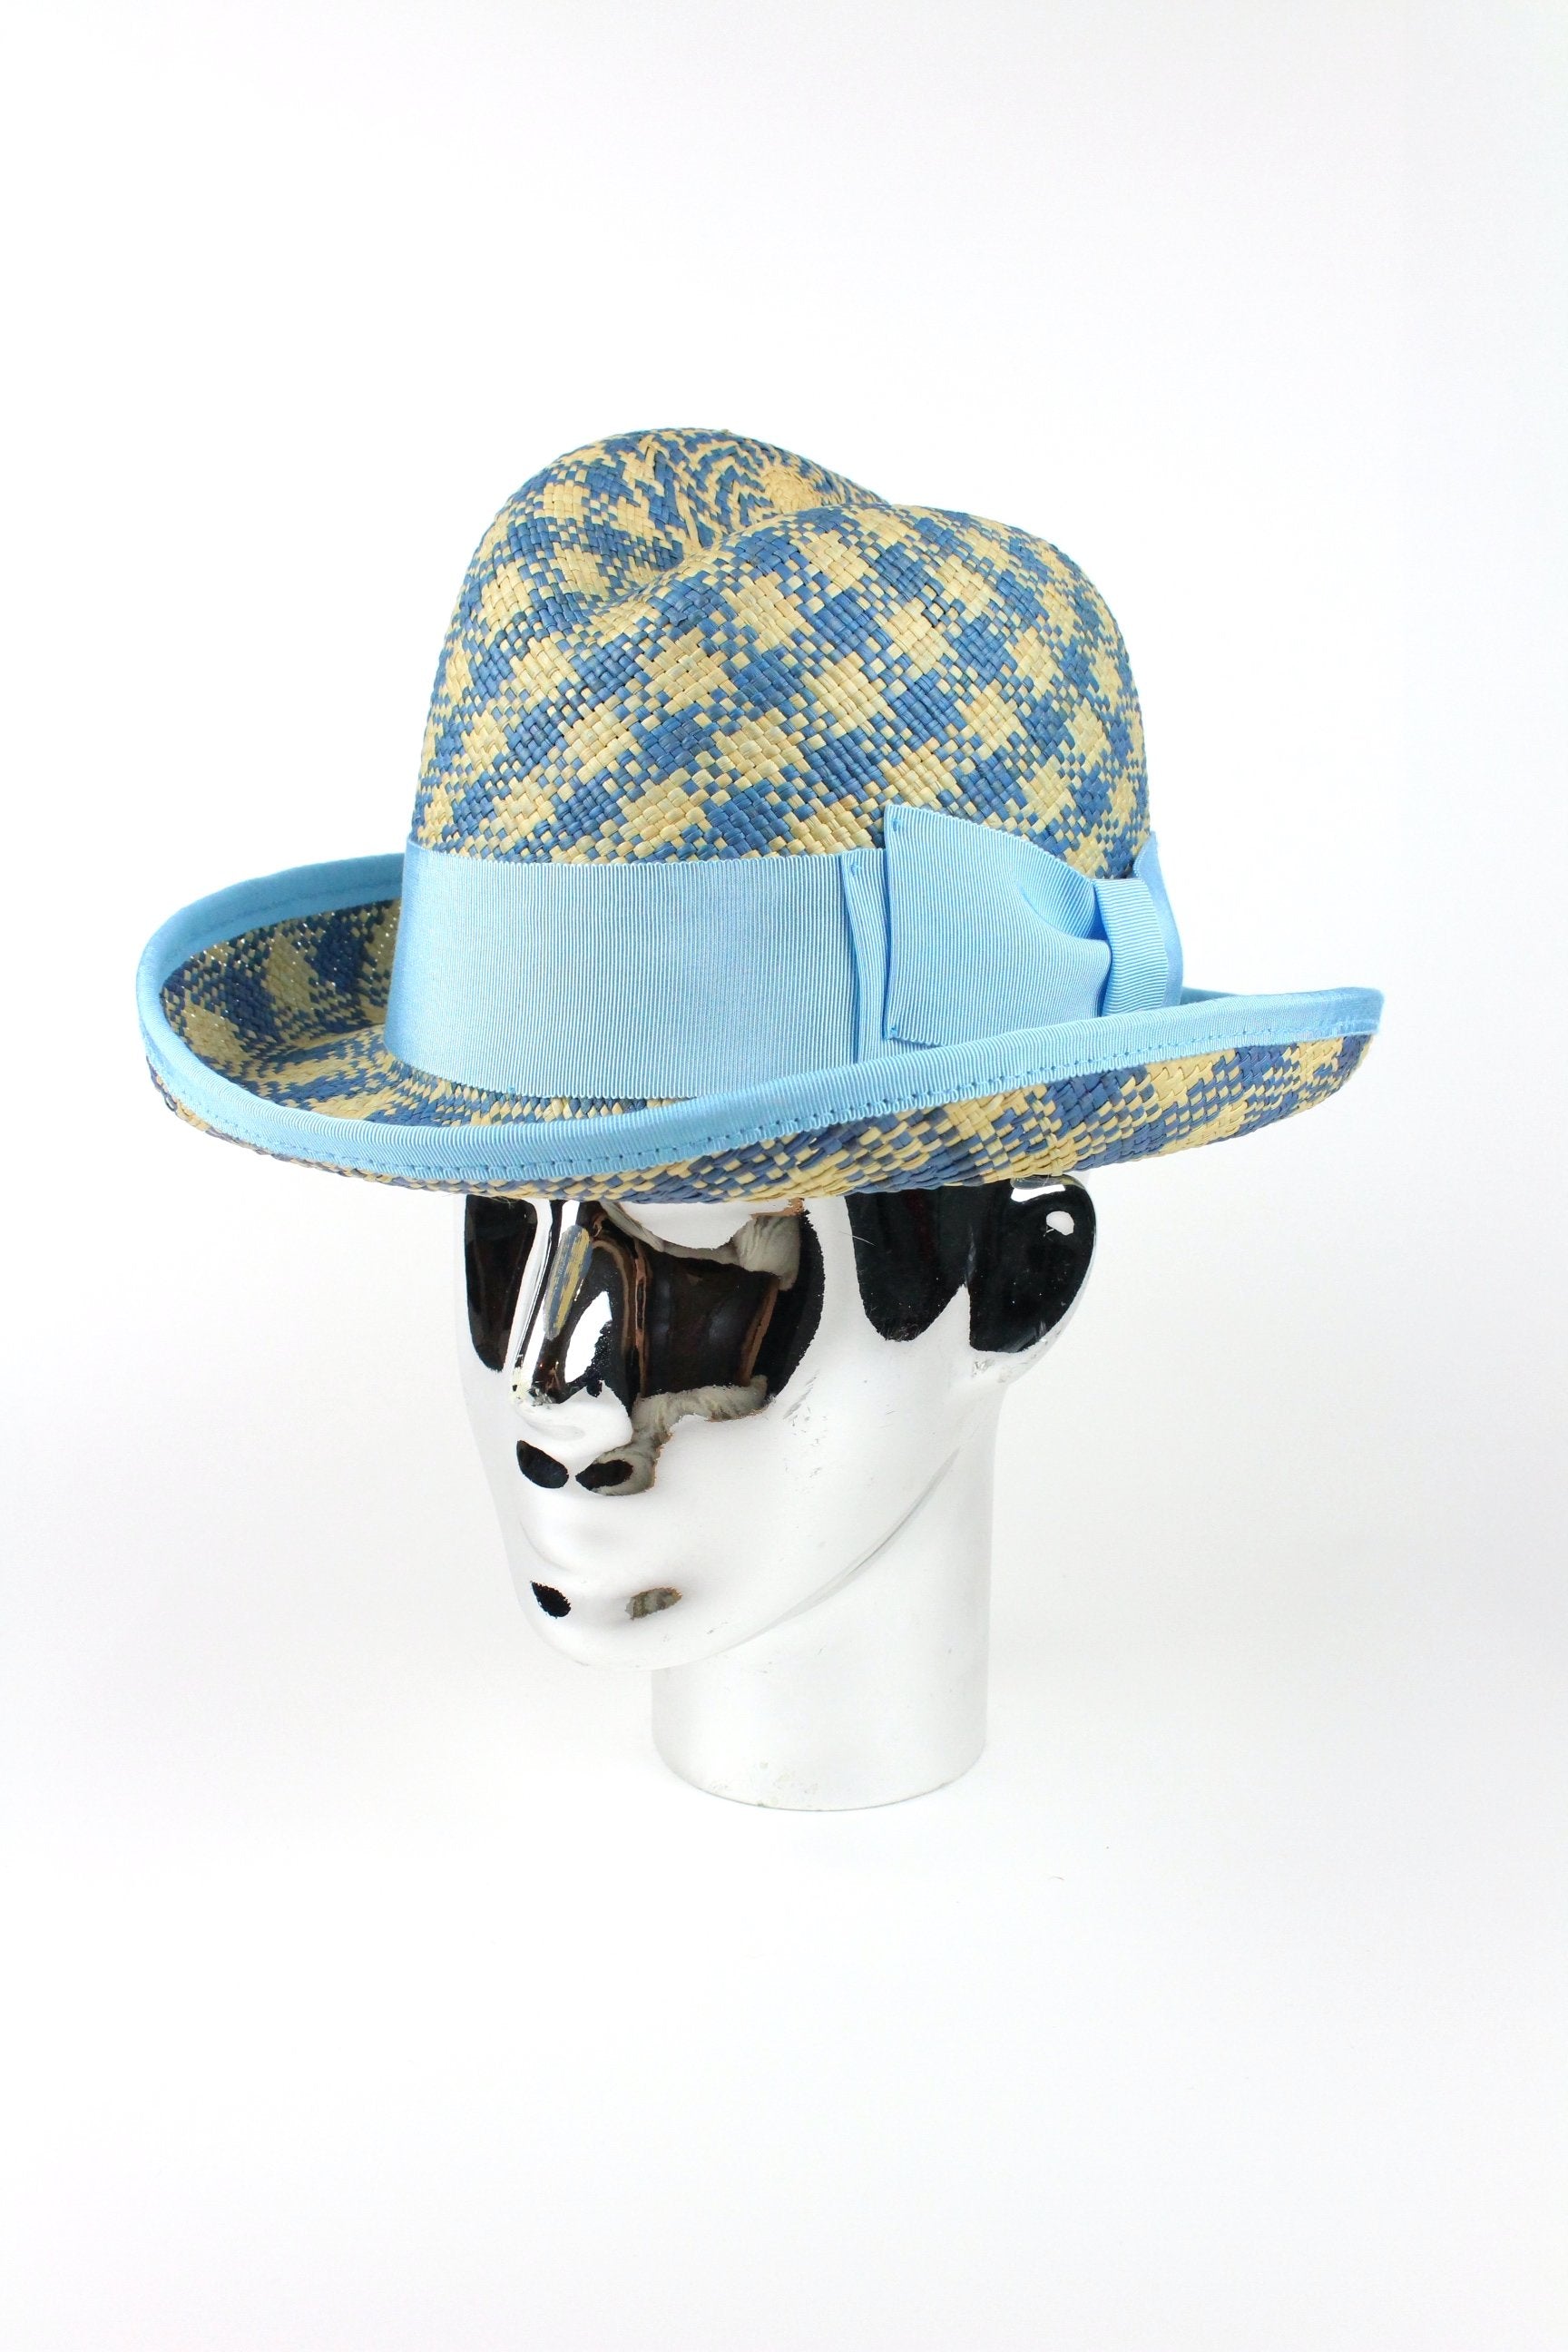 PANAMA FLASH TIPPER - HORIZON TWIST-hats-A Child Of The Jago